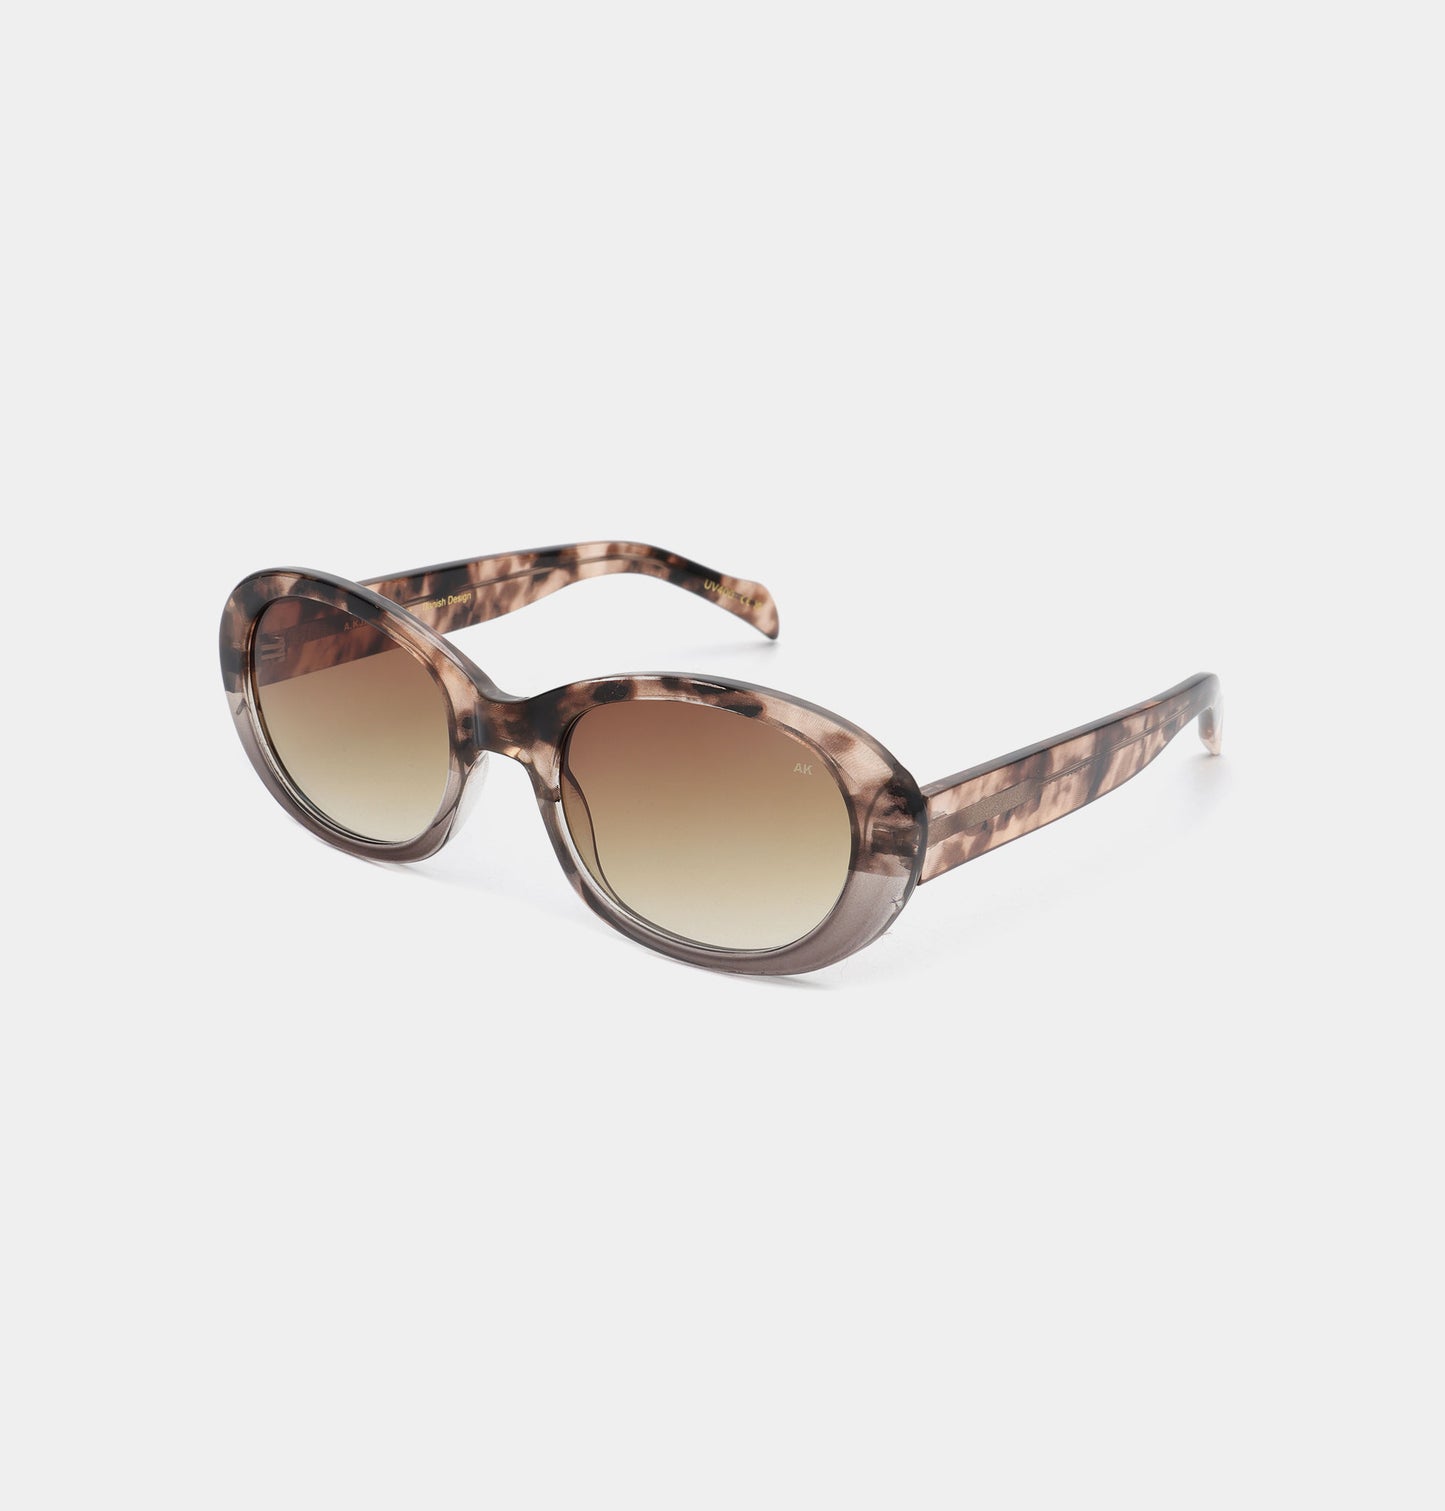 Anma Sunglasses - Coquina/Grey Transparent